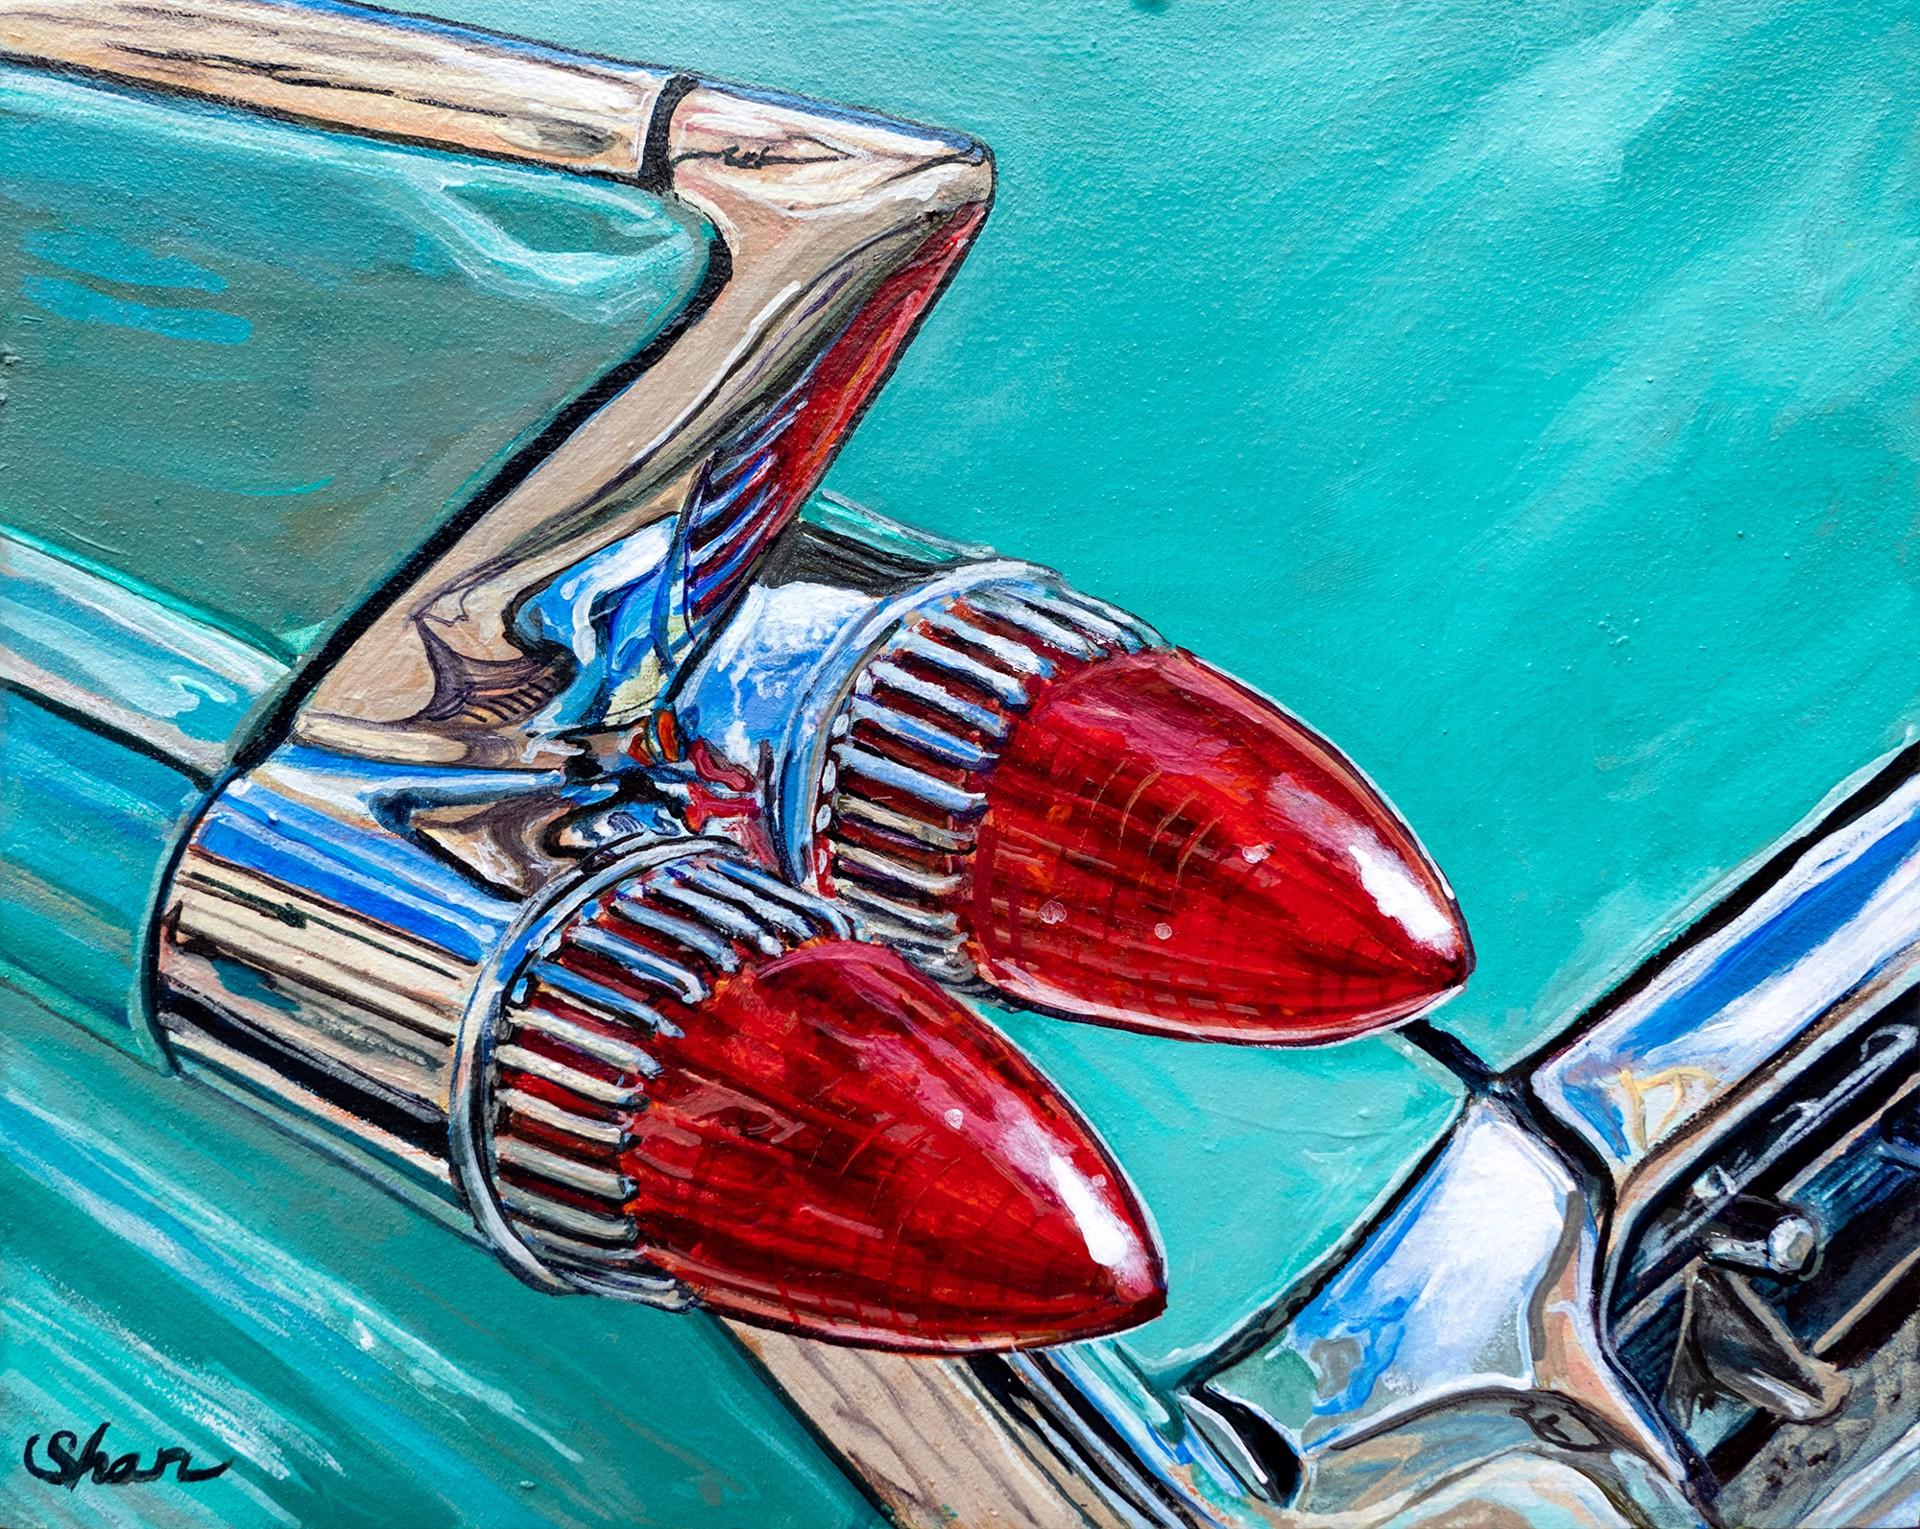 Shan Fannin Figurative Painting - 1959 Cadillac Tailfin - Vegas Turquoise